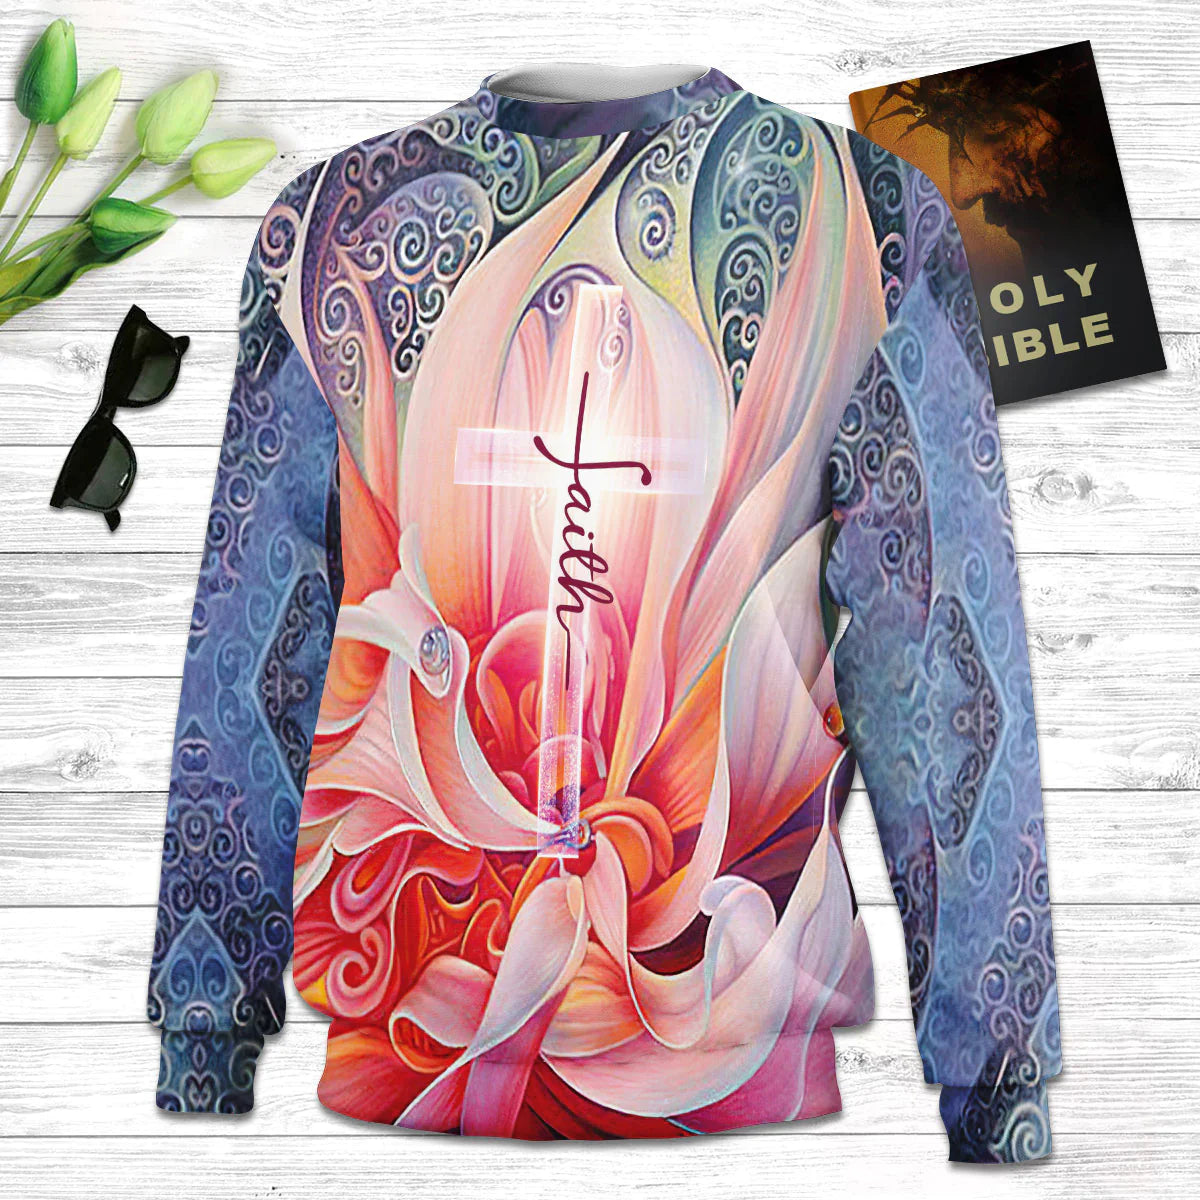 Christianartbag 3D Sweater, Faith Flower And Cross, Unisex Sweater, Christmas Gift. - Christian Art Bag